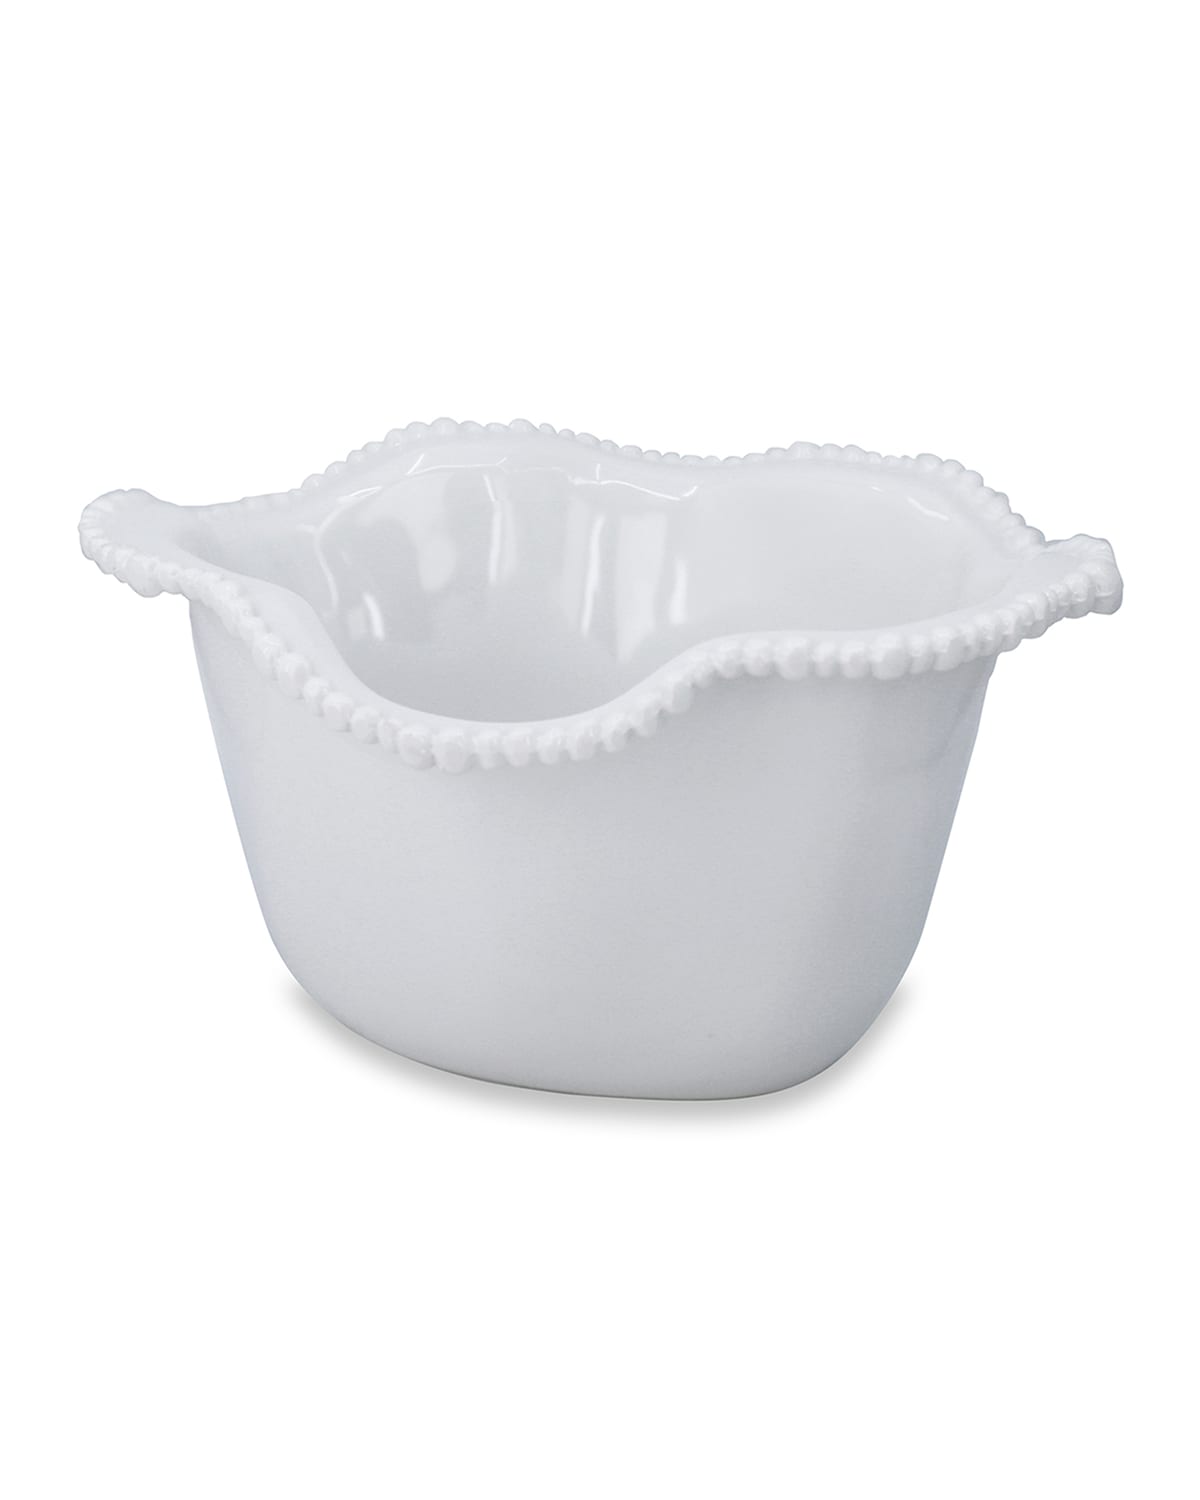 Beatriz Ball Vida Alegria Ice Bucket In White